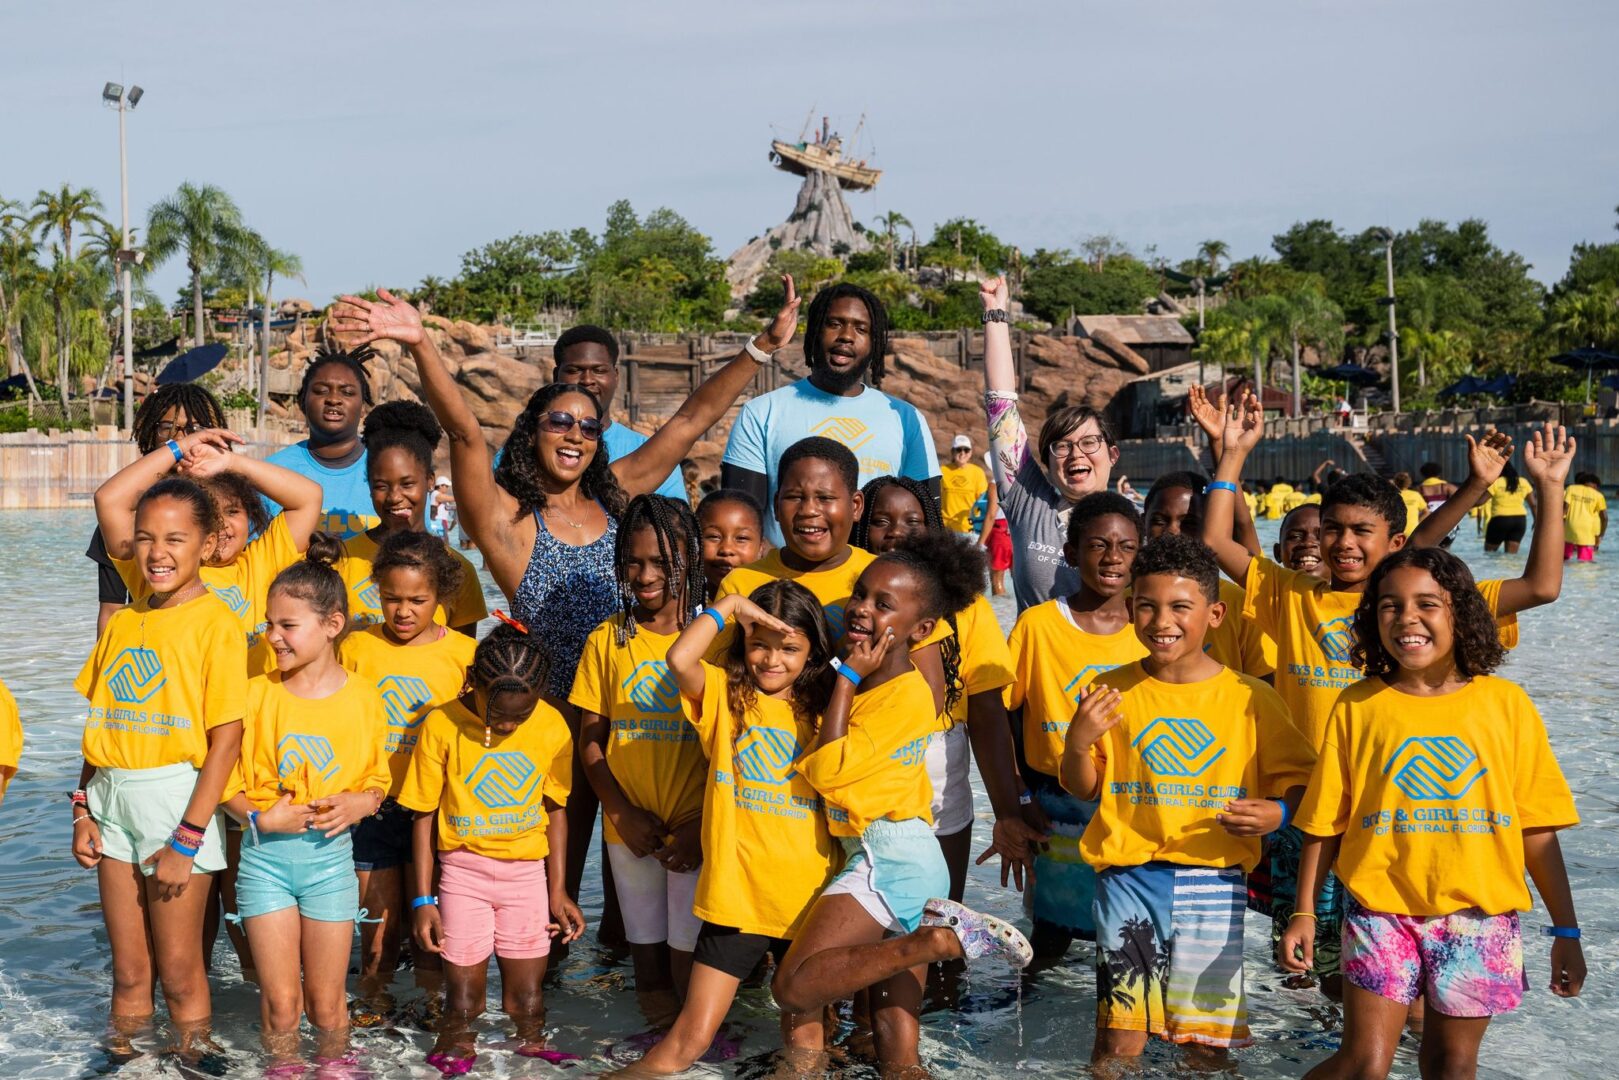 Disney World Hosts World’s Largest Swimming Lesson at Typhoon Lagoon Water Park